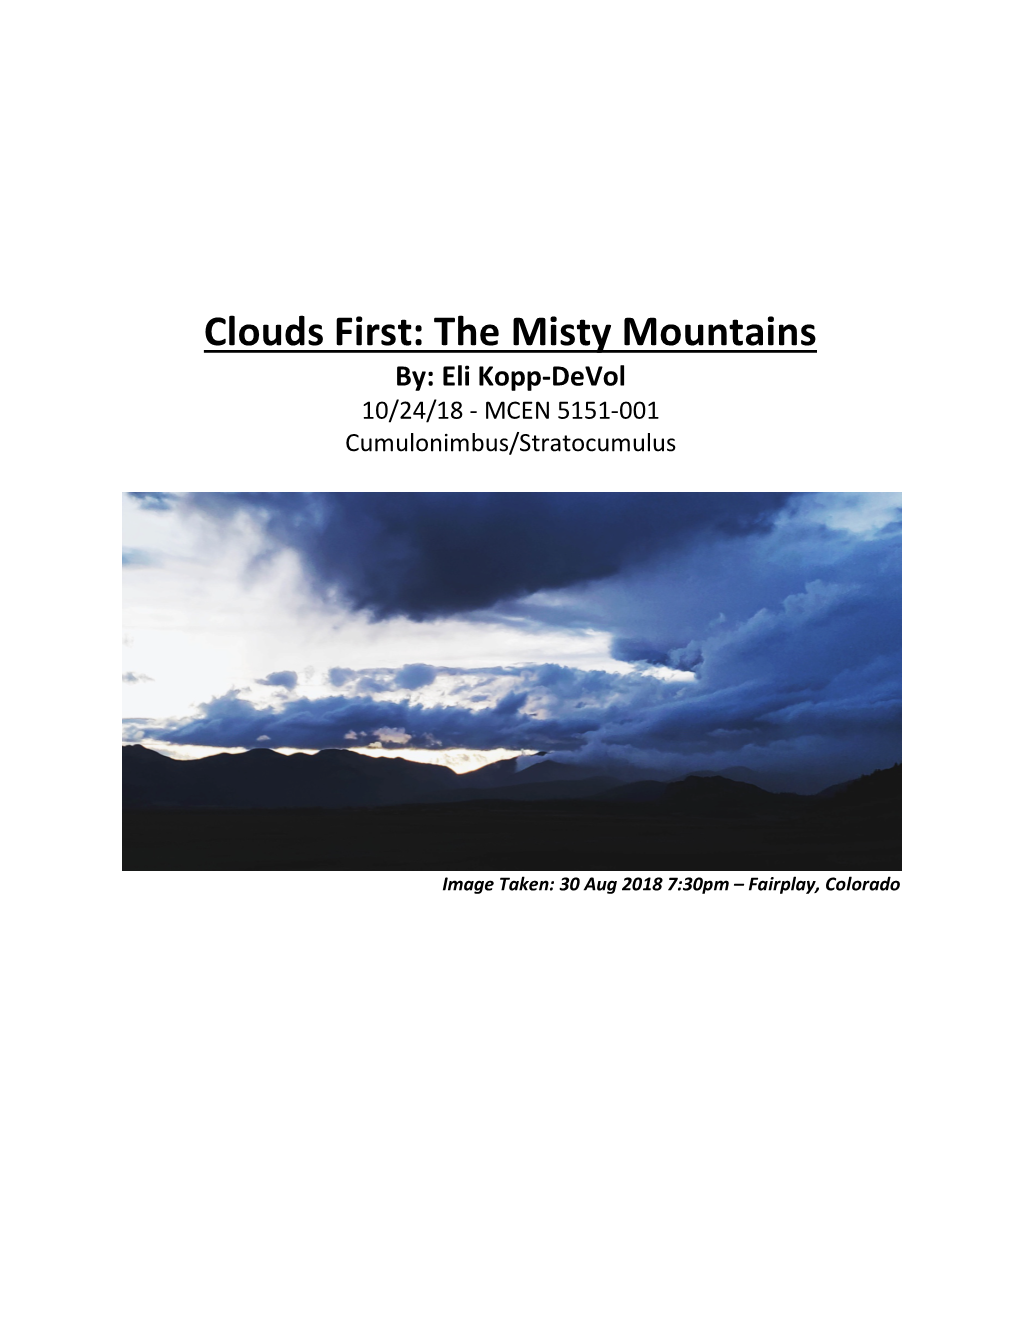 Clouds First: the Misty Mountains By: Eli Kopp-Devol 10/24/18 - MCEN 5151-001 Cumulonimbus/Stratocumulus